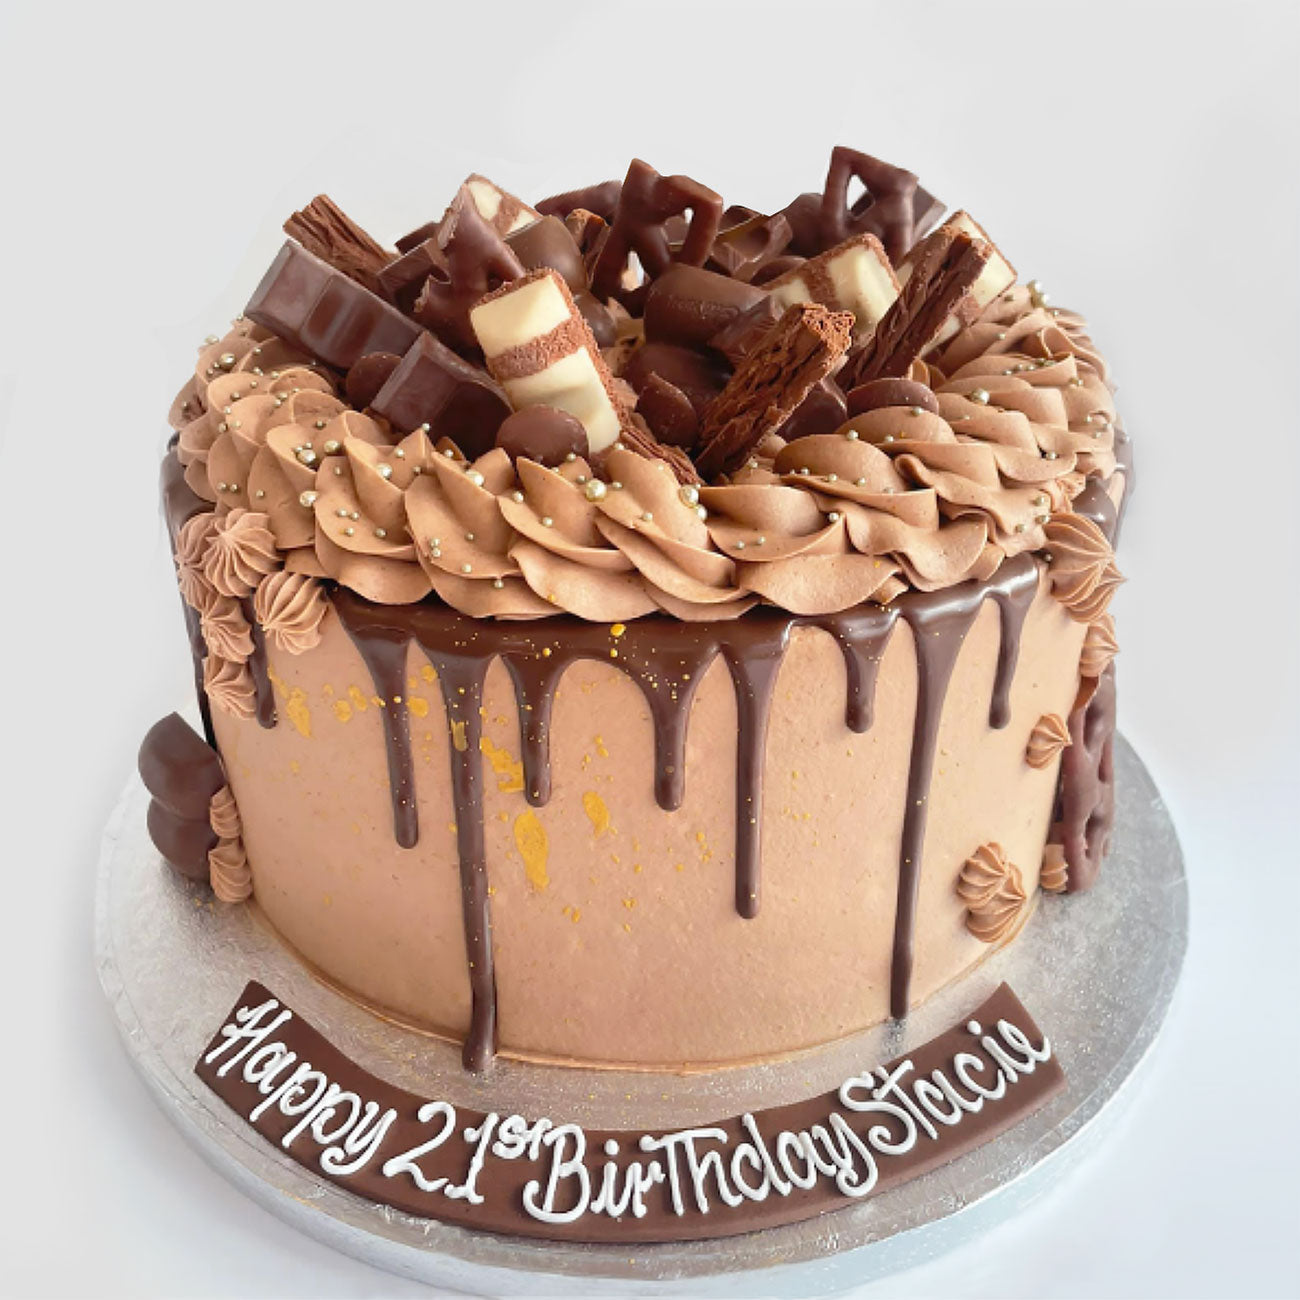 Chocolate Whopper Cake - NEW!